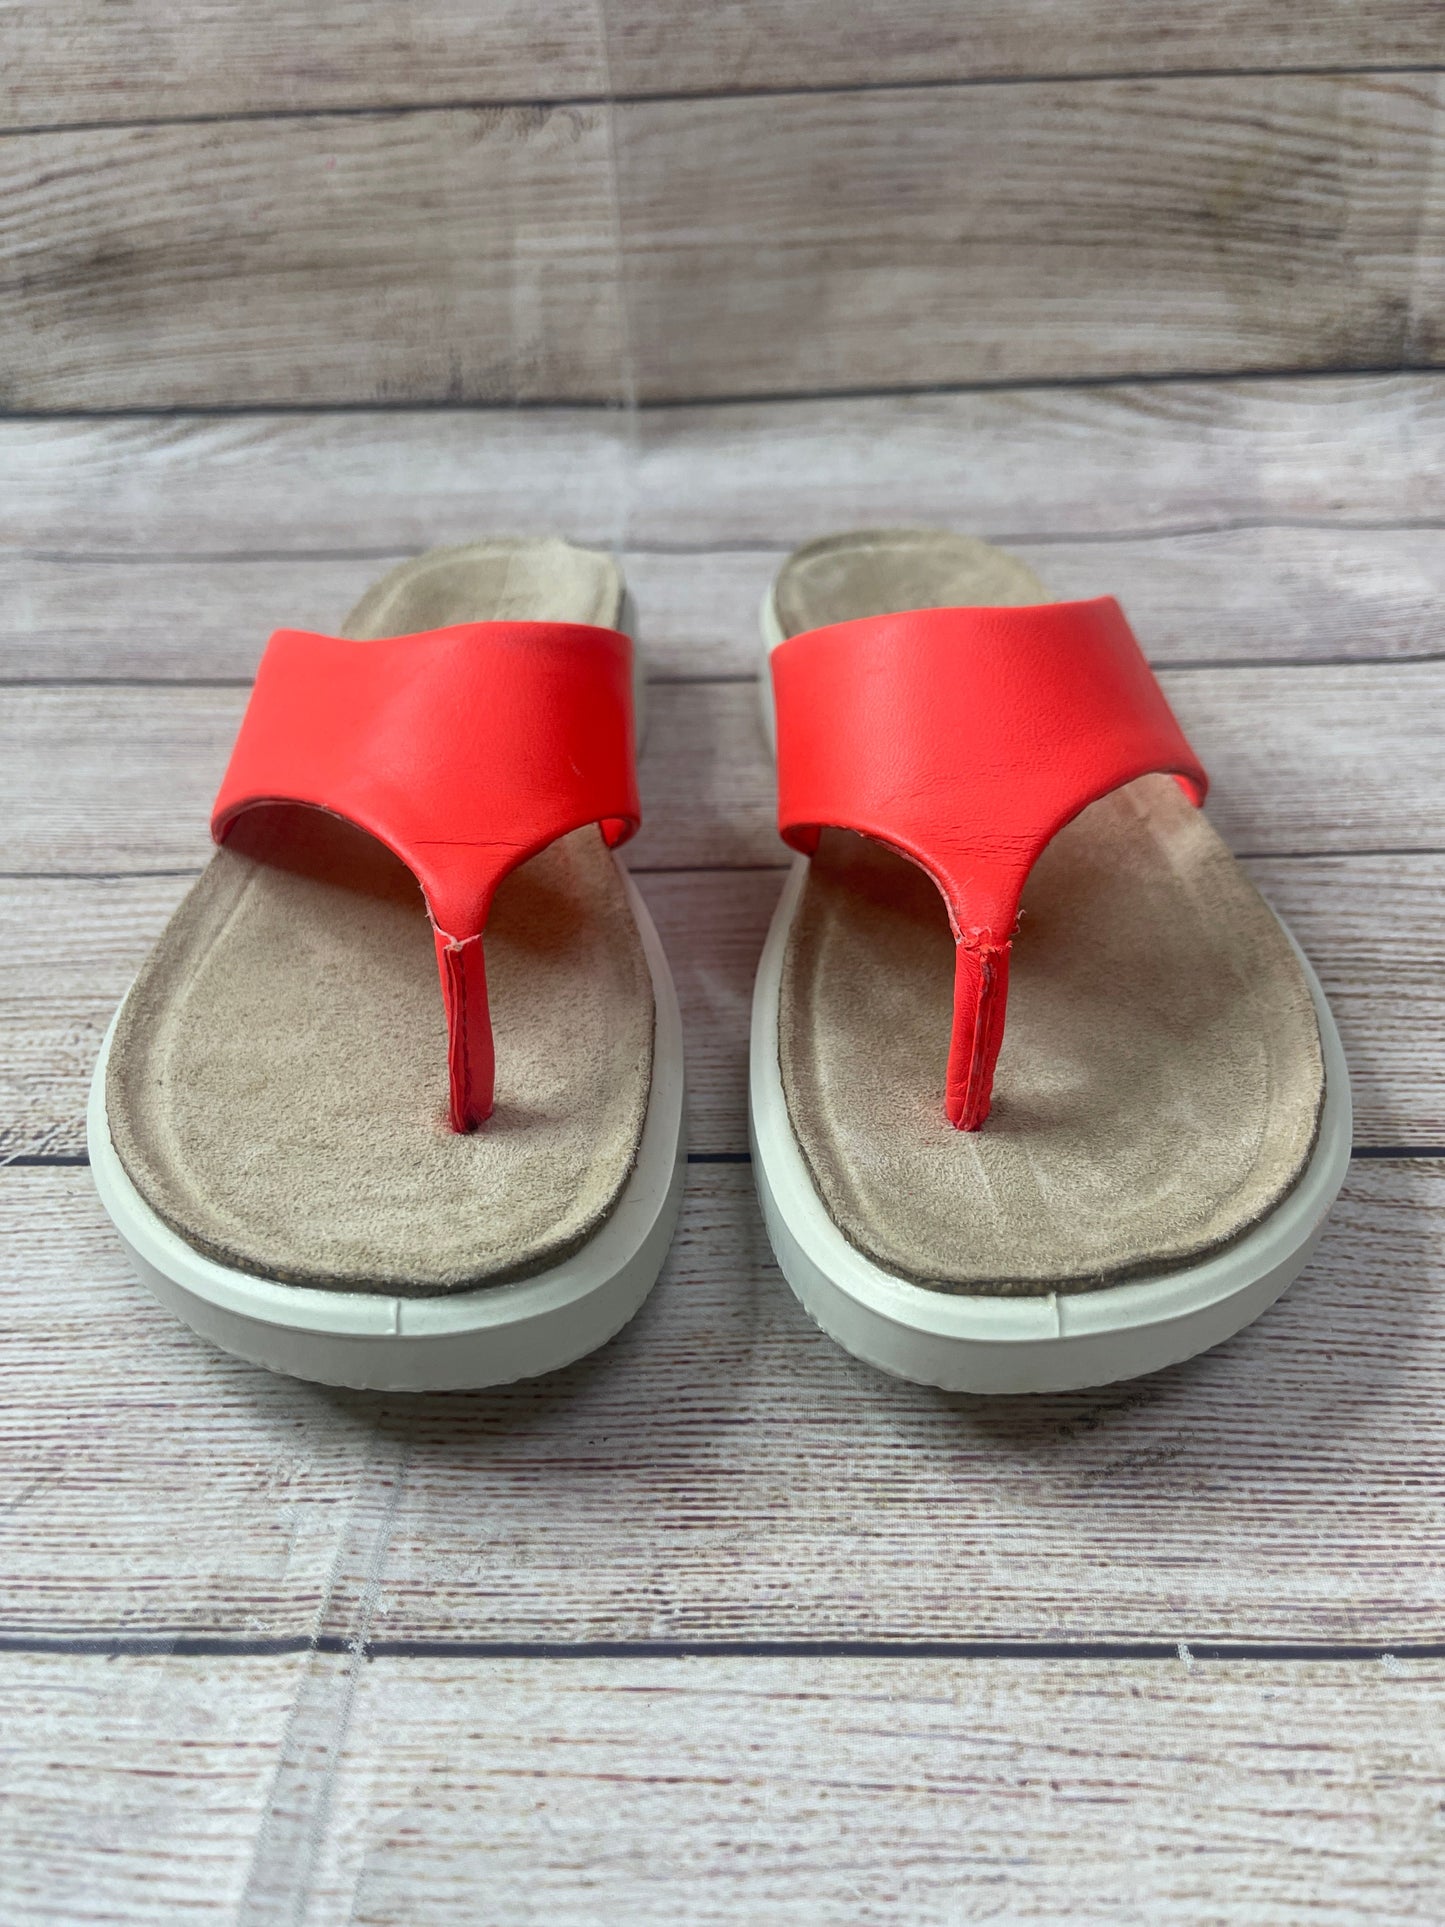 Sandals Flip Flops By Ecco  Size: 7